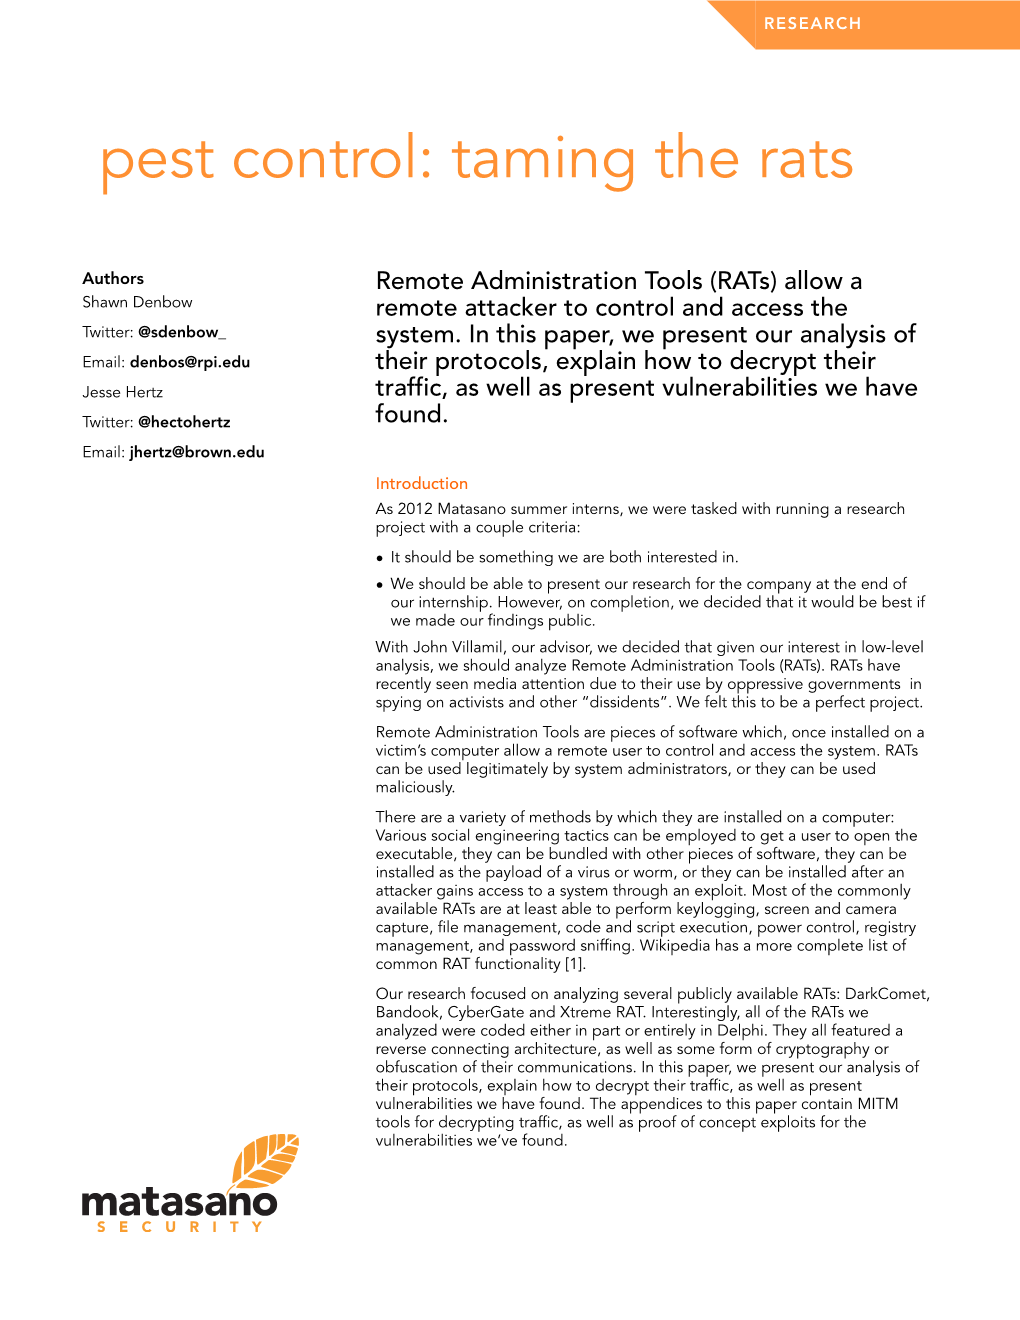 Pest Control: Taming the Rats